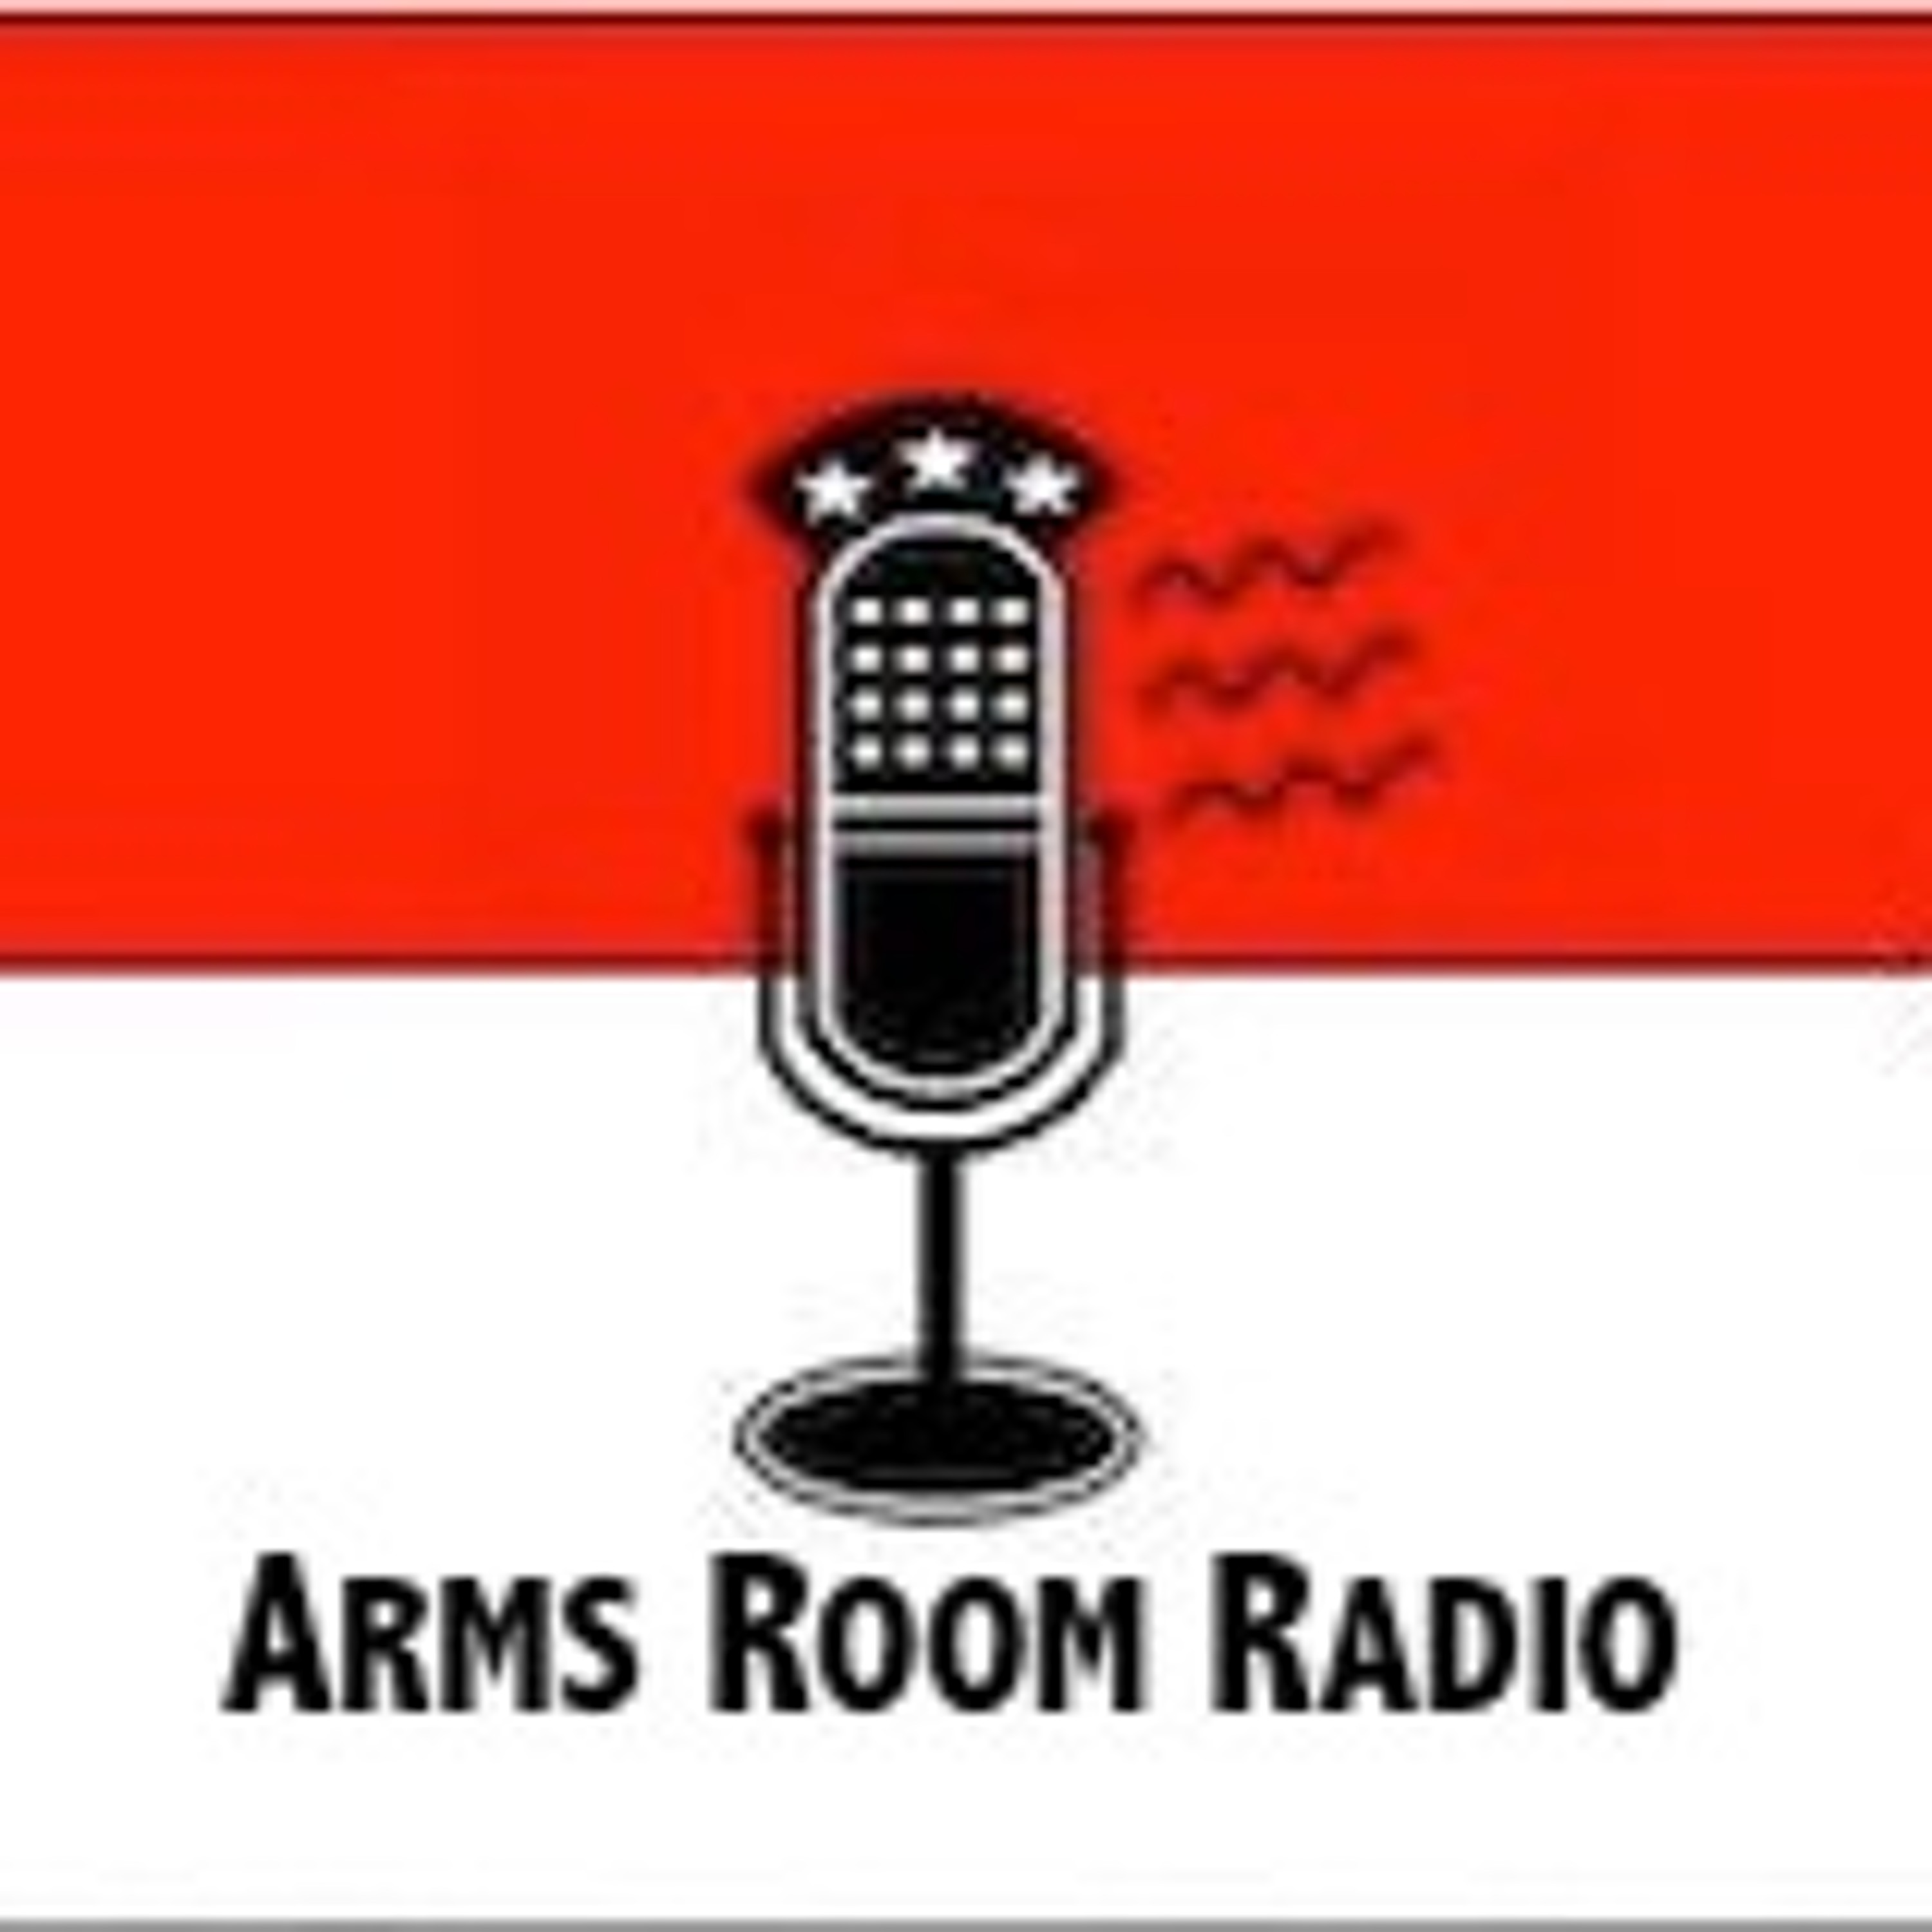 ArmsRoomRadio 09.26.20 Derek LeBlanc Kids Safe Foundation